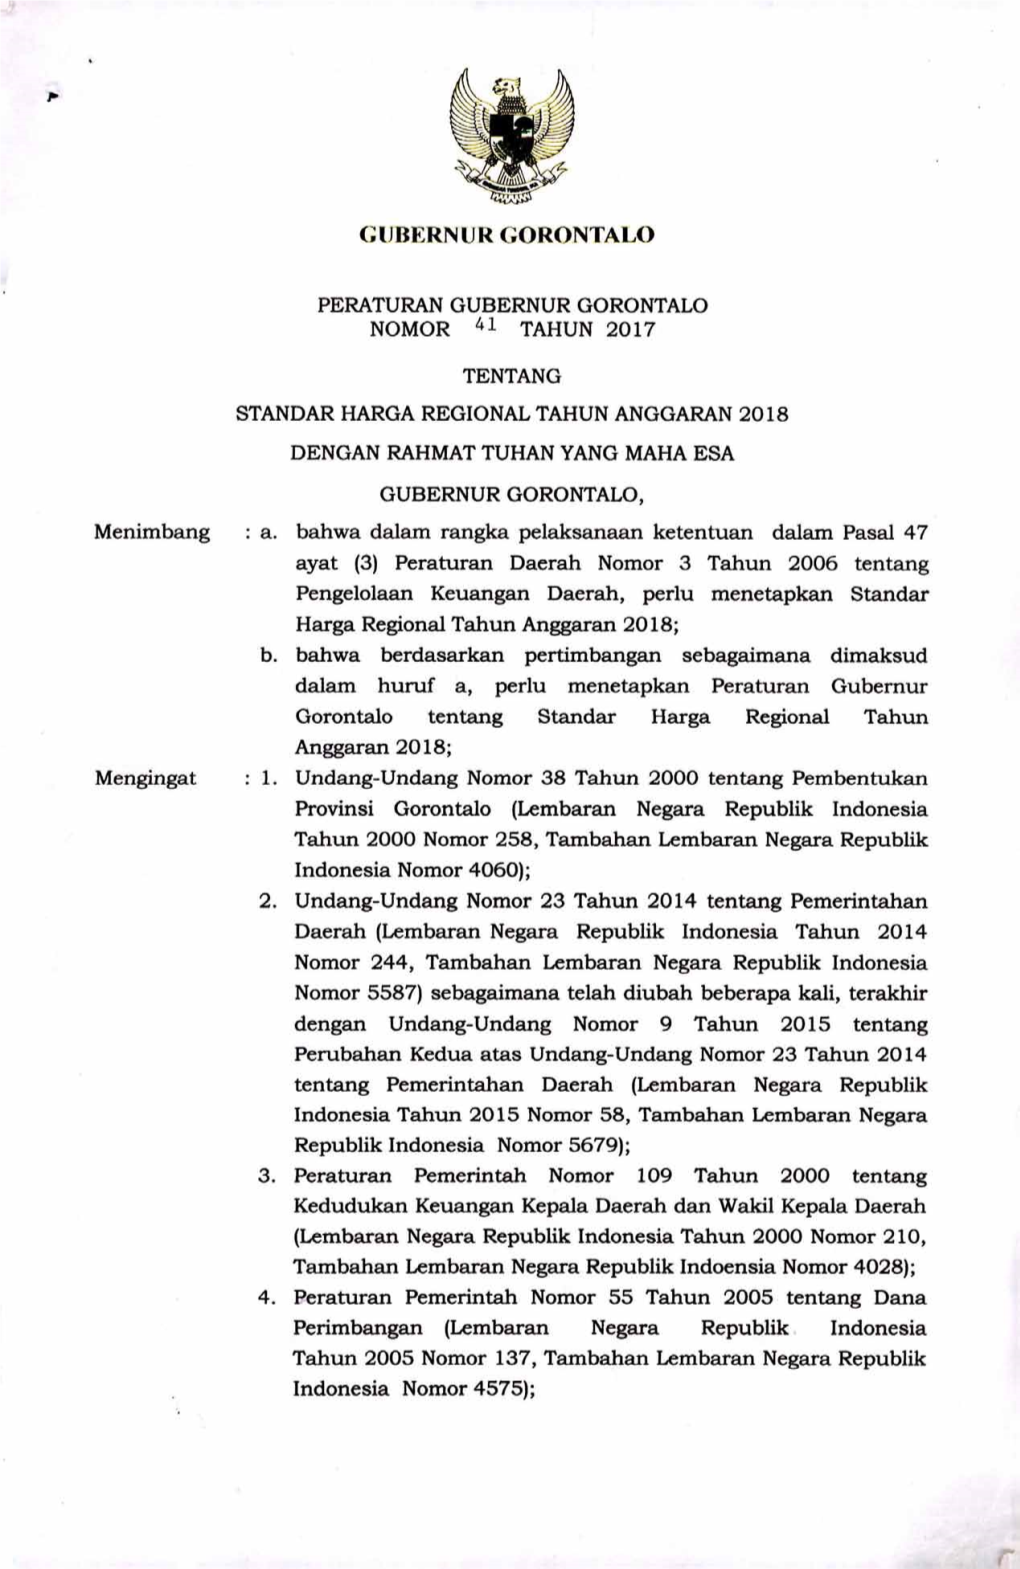 Pergub Prov Gorontalo No 41 Th 2017 Ttg Standar Harga Regional TA 2018.Pdf